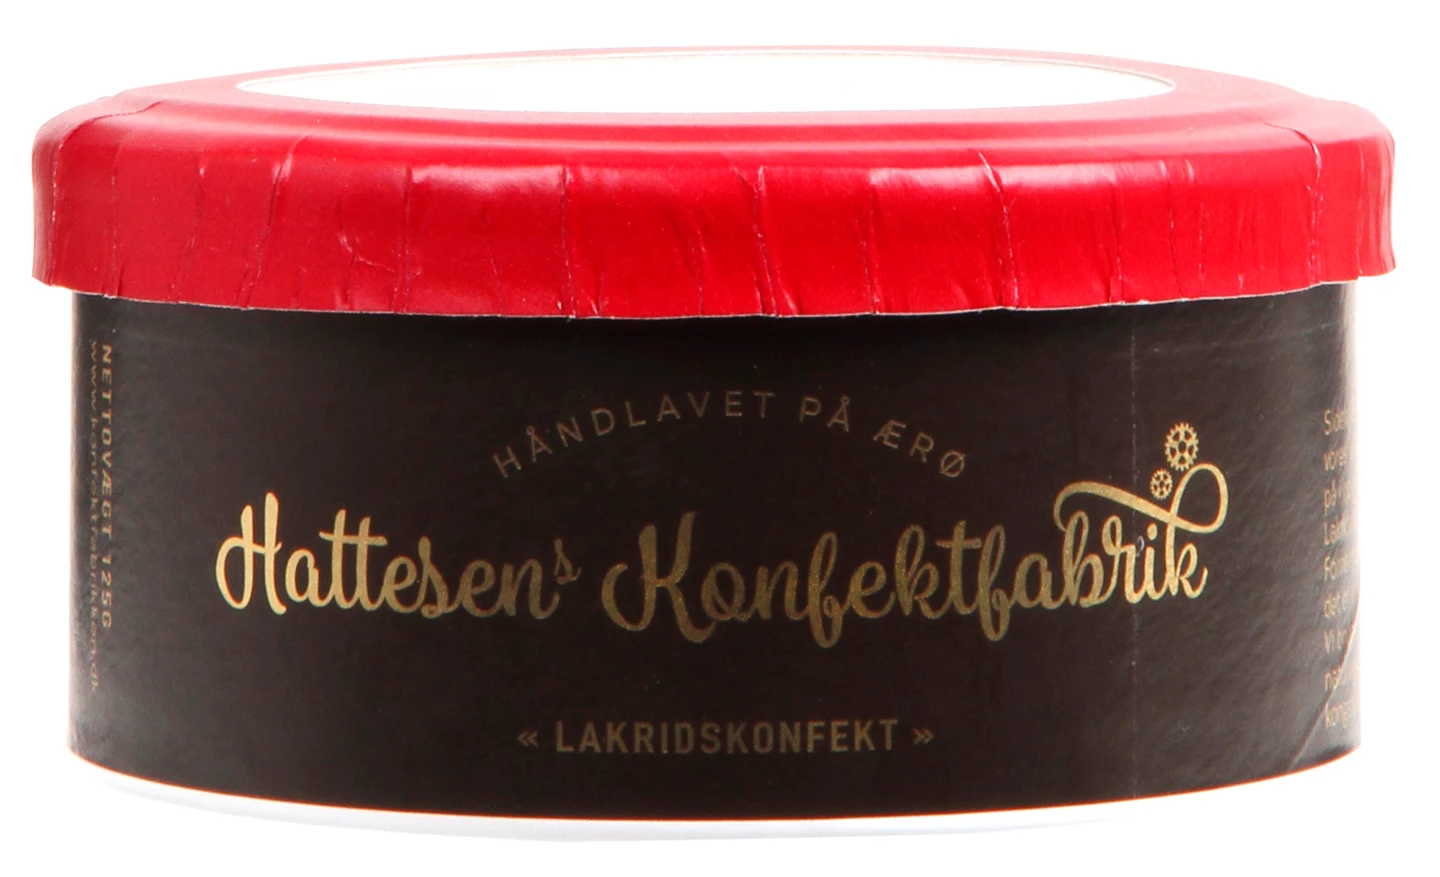 Løgismose Delikatesser Hattesens Konfektfabrik Lakridskonfekt Blåbær Stikkelsbær Jordbær 125g - 136467